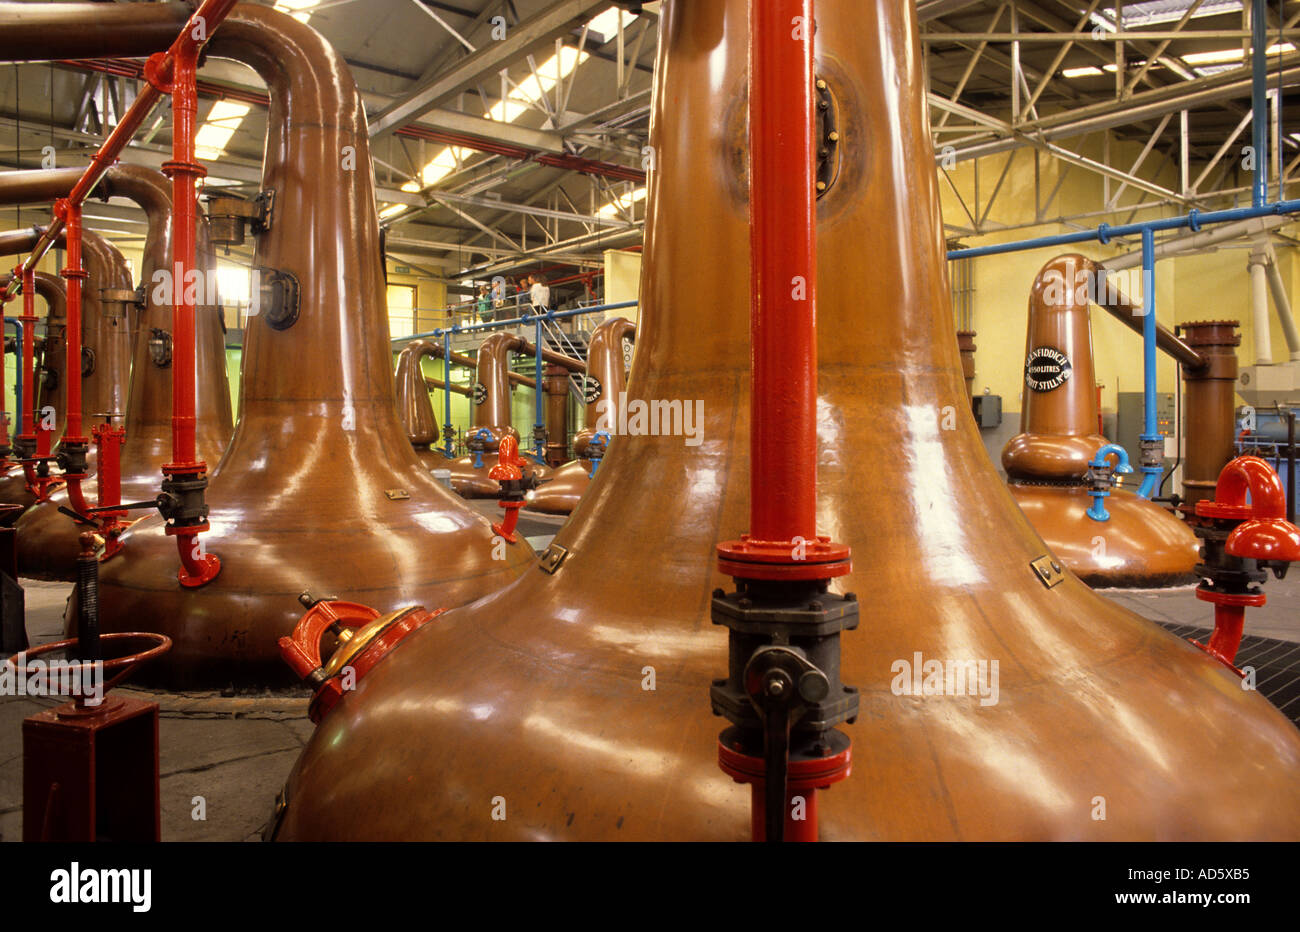 Scotland Whisky Distillery Stills Glennfiddich Stock Photo